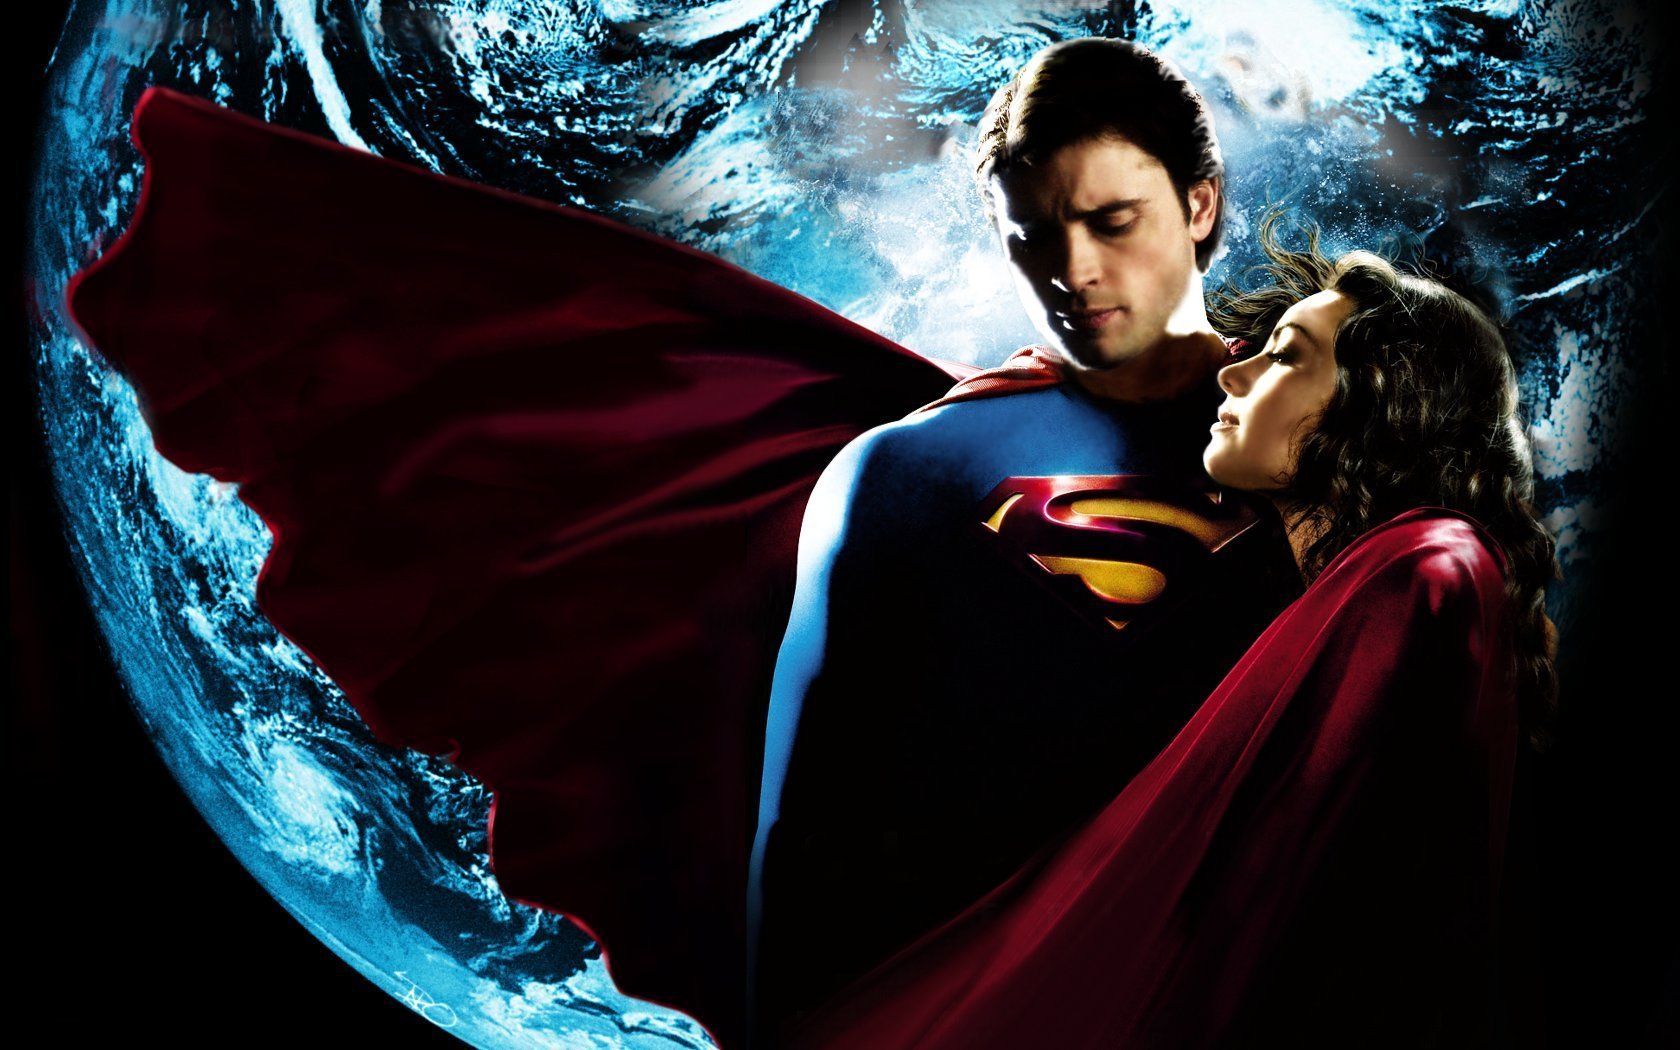 iconic wallpaper,superman,superhero,fictional character,justice league,hero